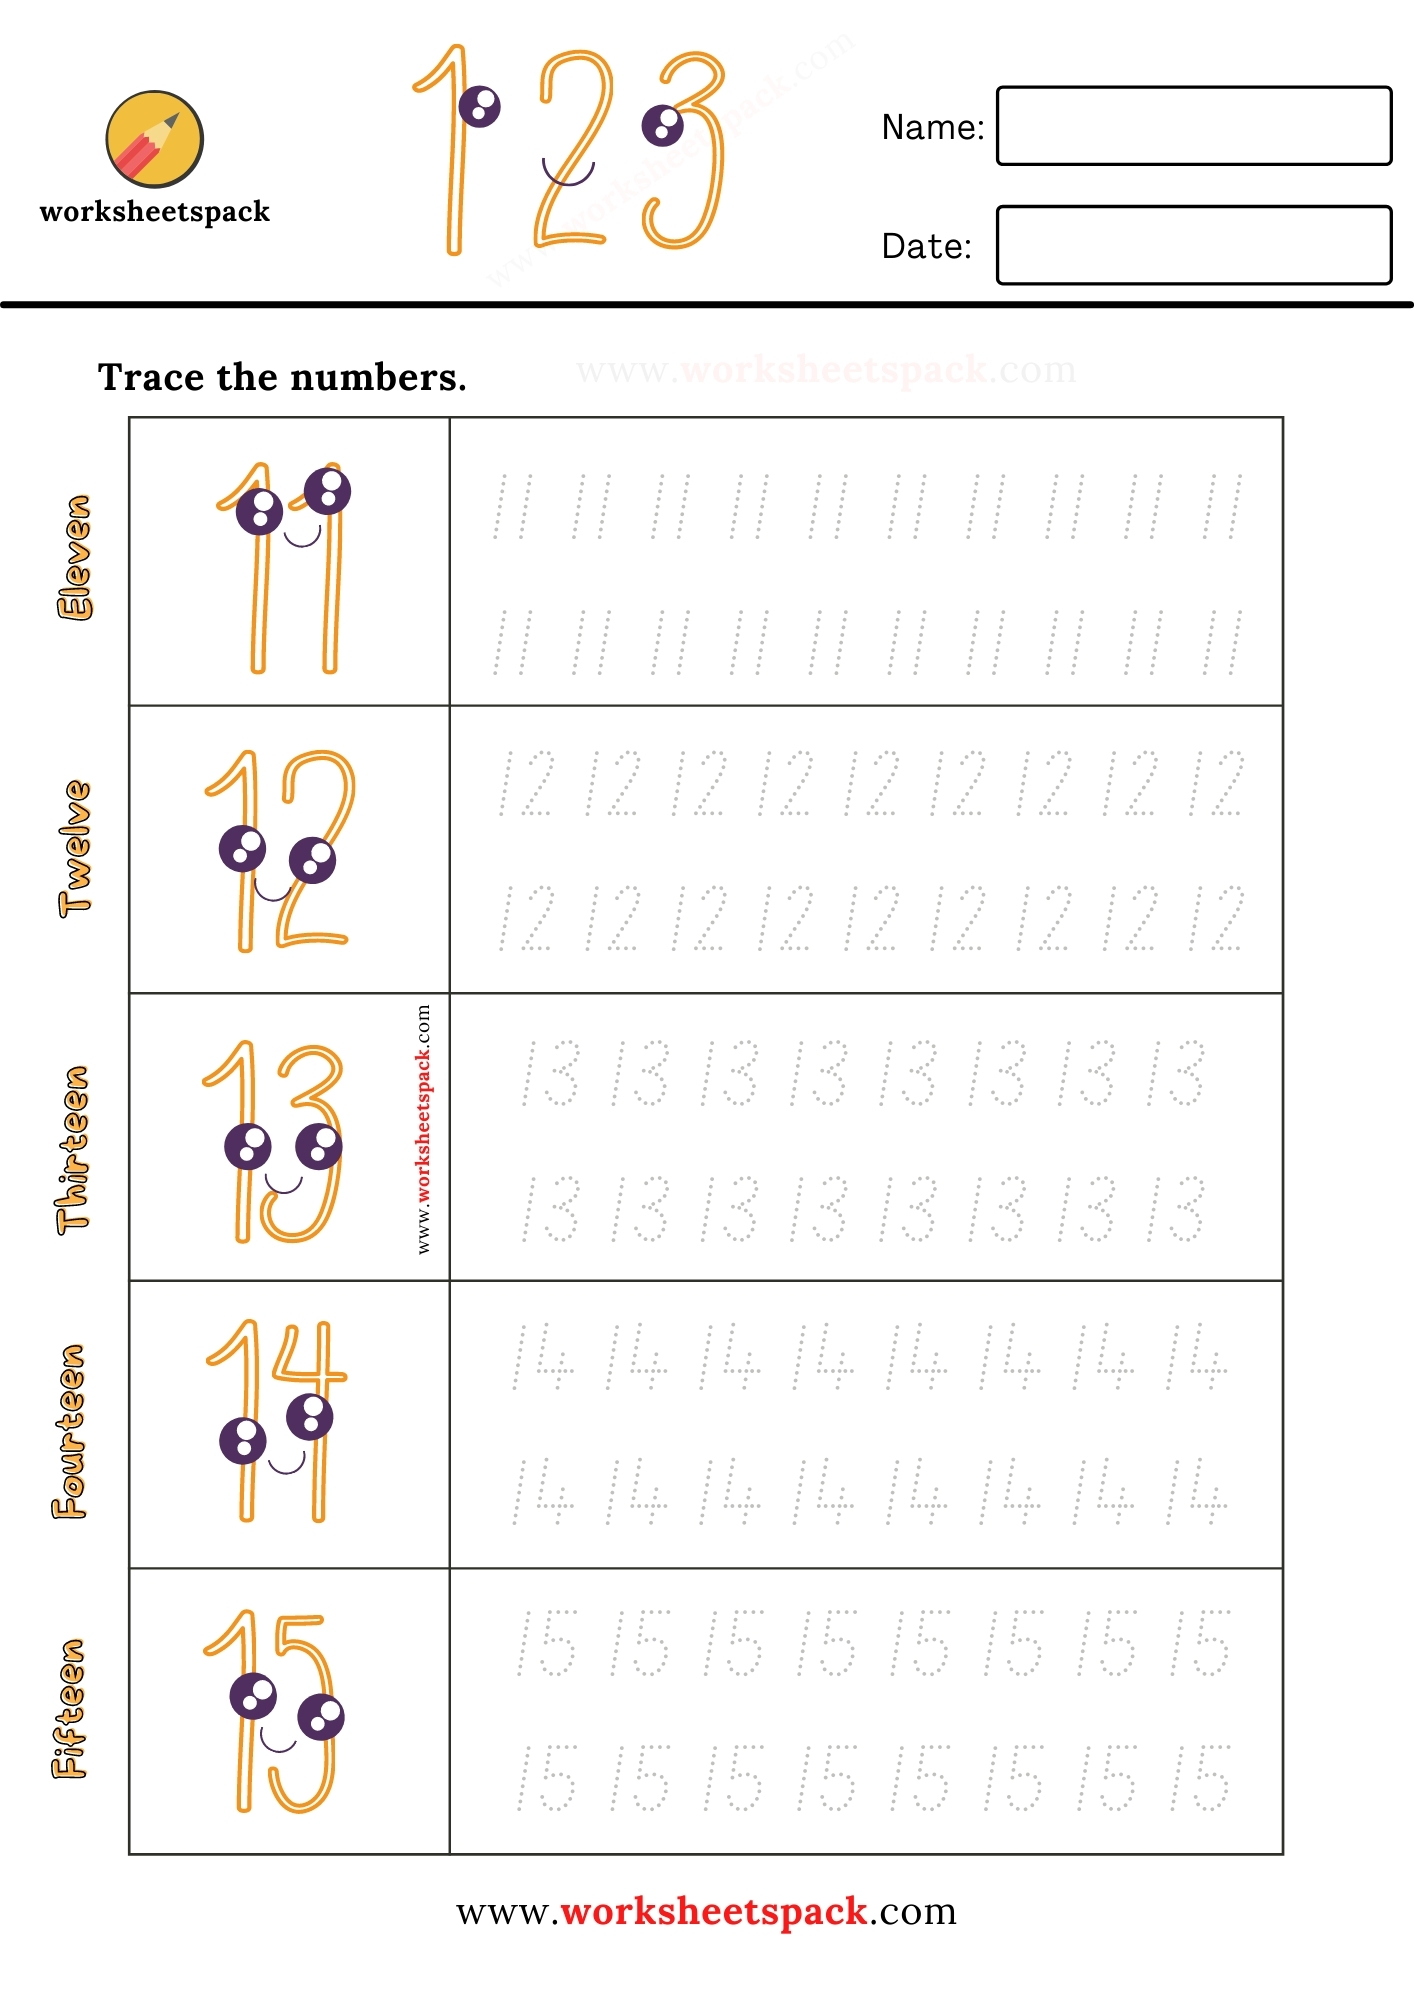 number-tracing-worksheets-1-50-worksheetspack